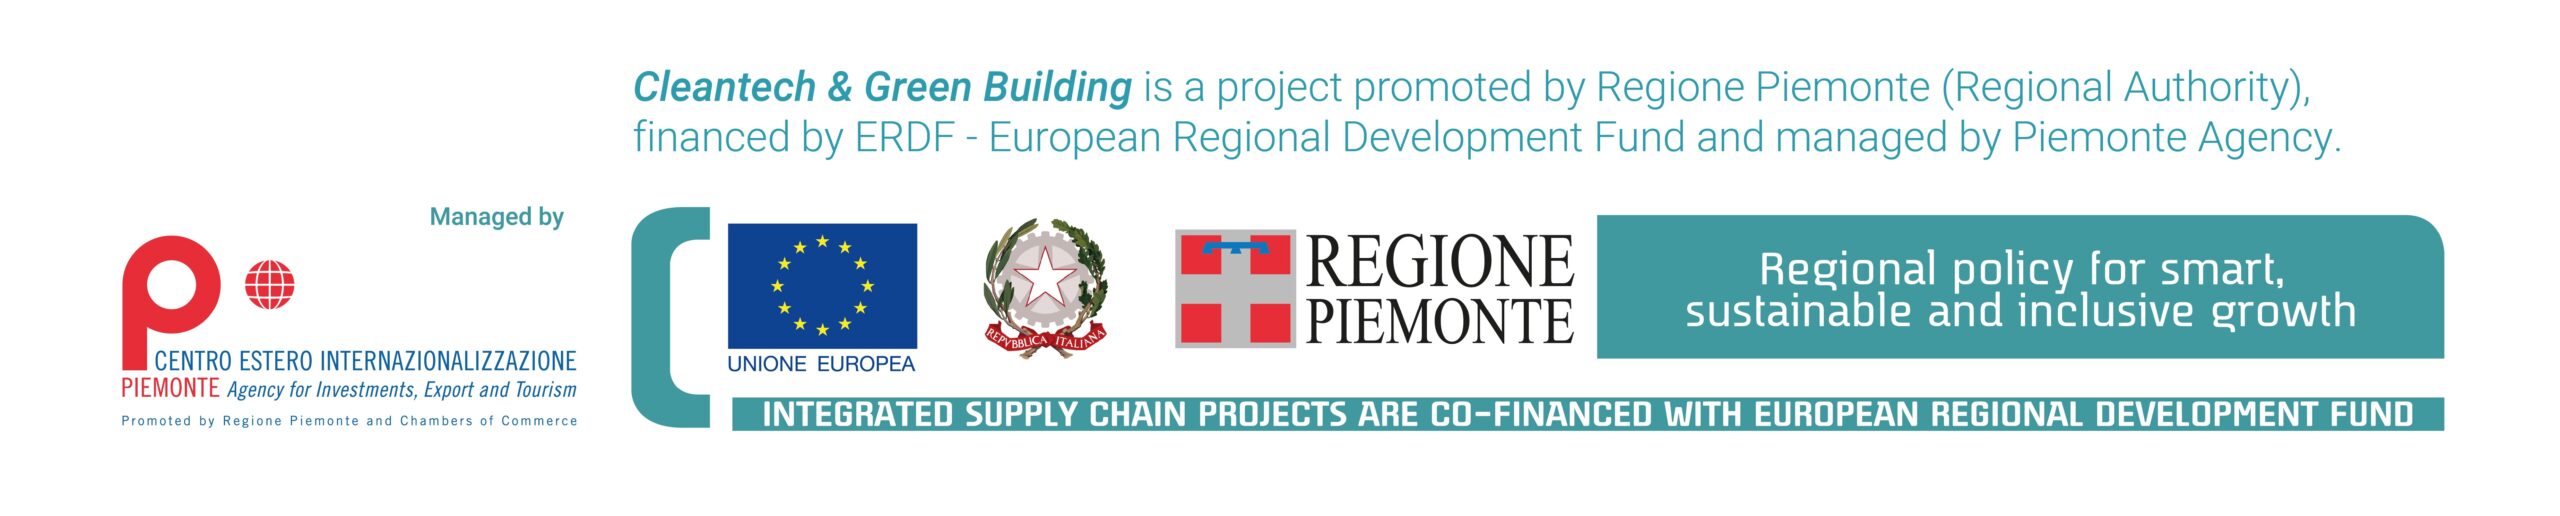 Piemonte: A successful Smart City Ecosystem